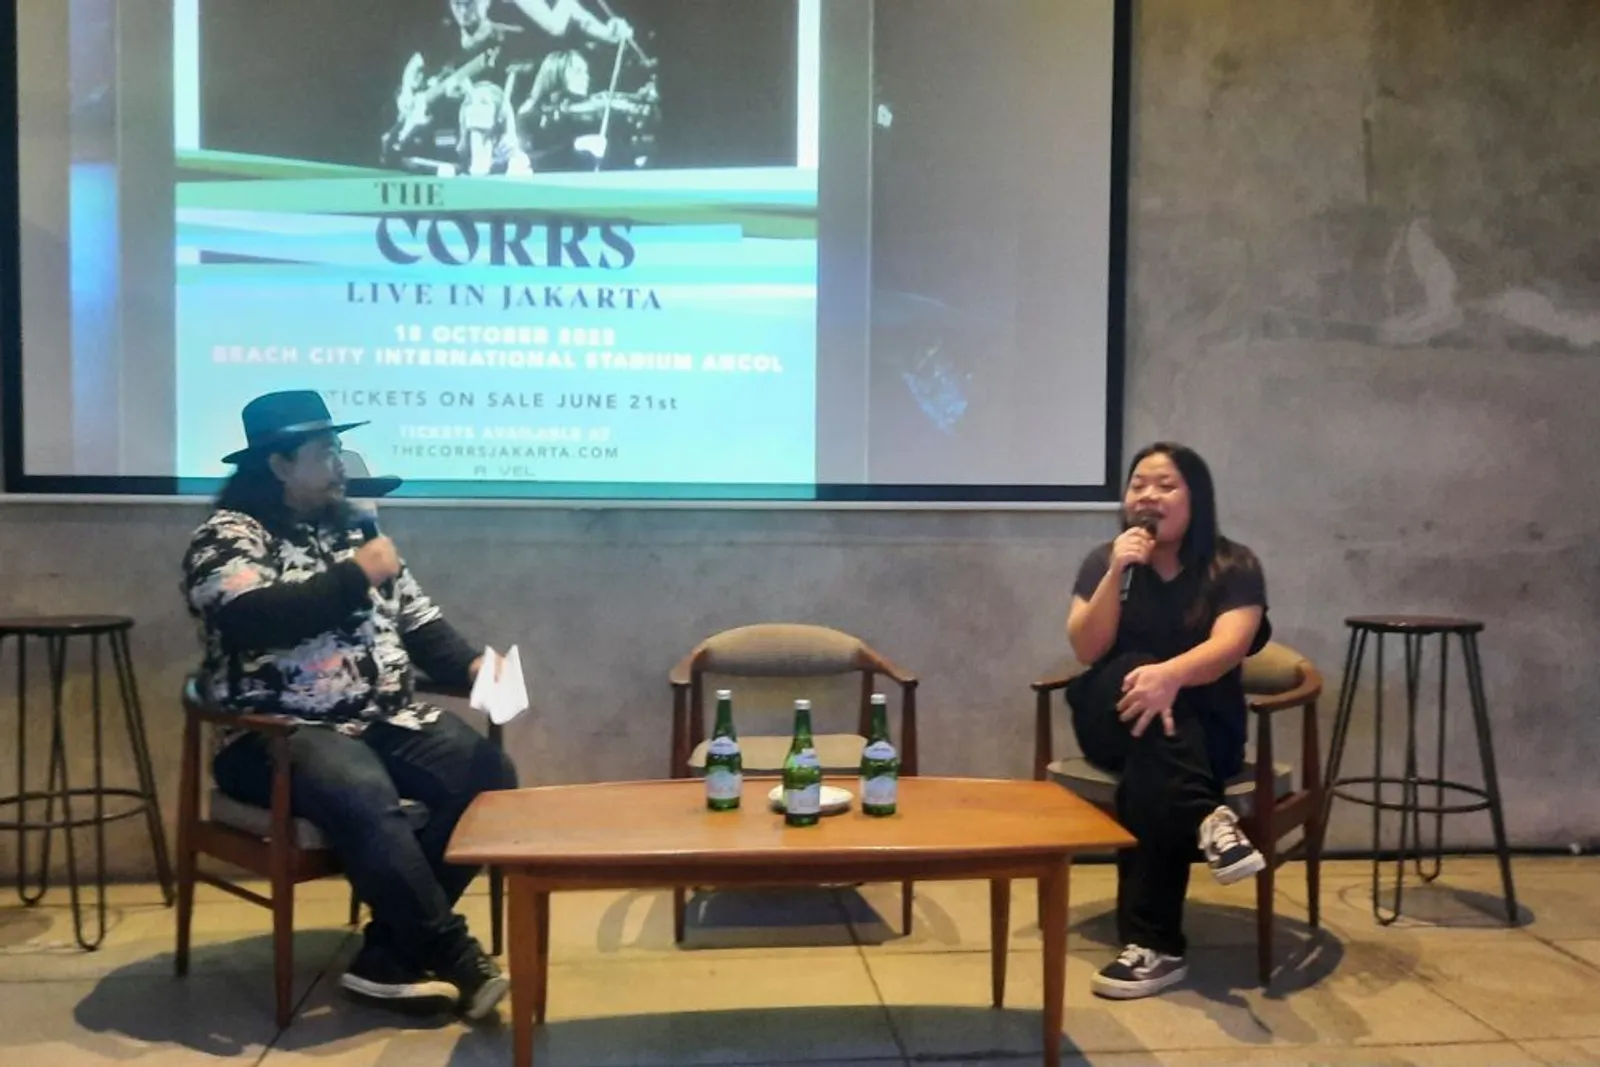 Tur Reuni Setelah 18 Tahun Vakum, The Corrs Akan Sambangi Jakarta!